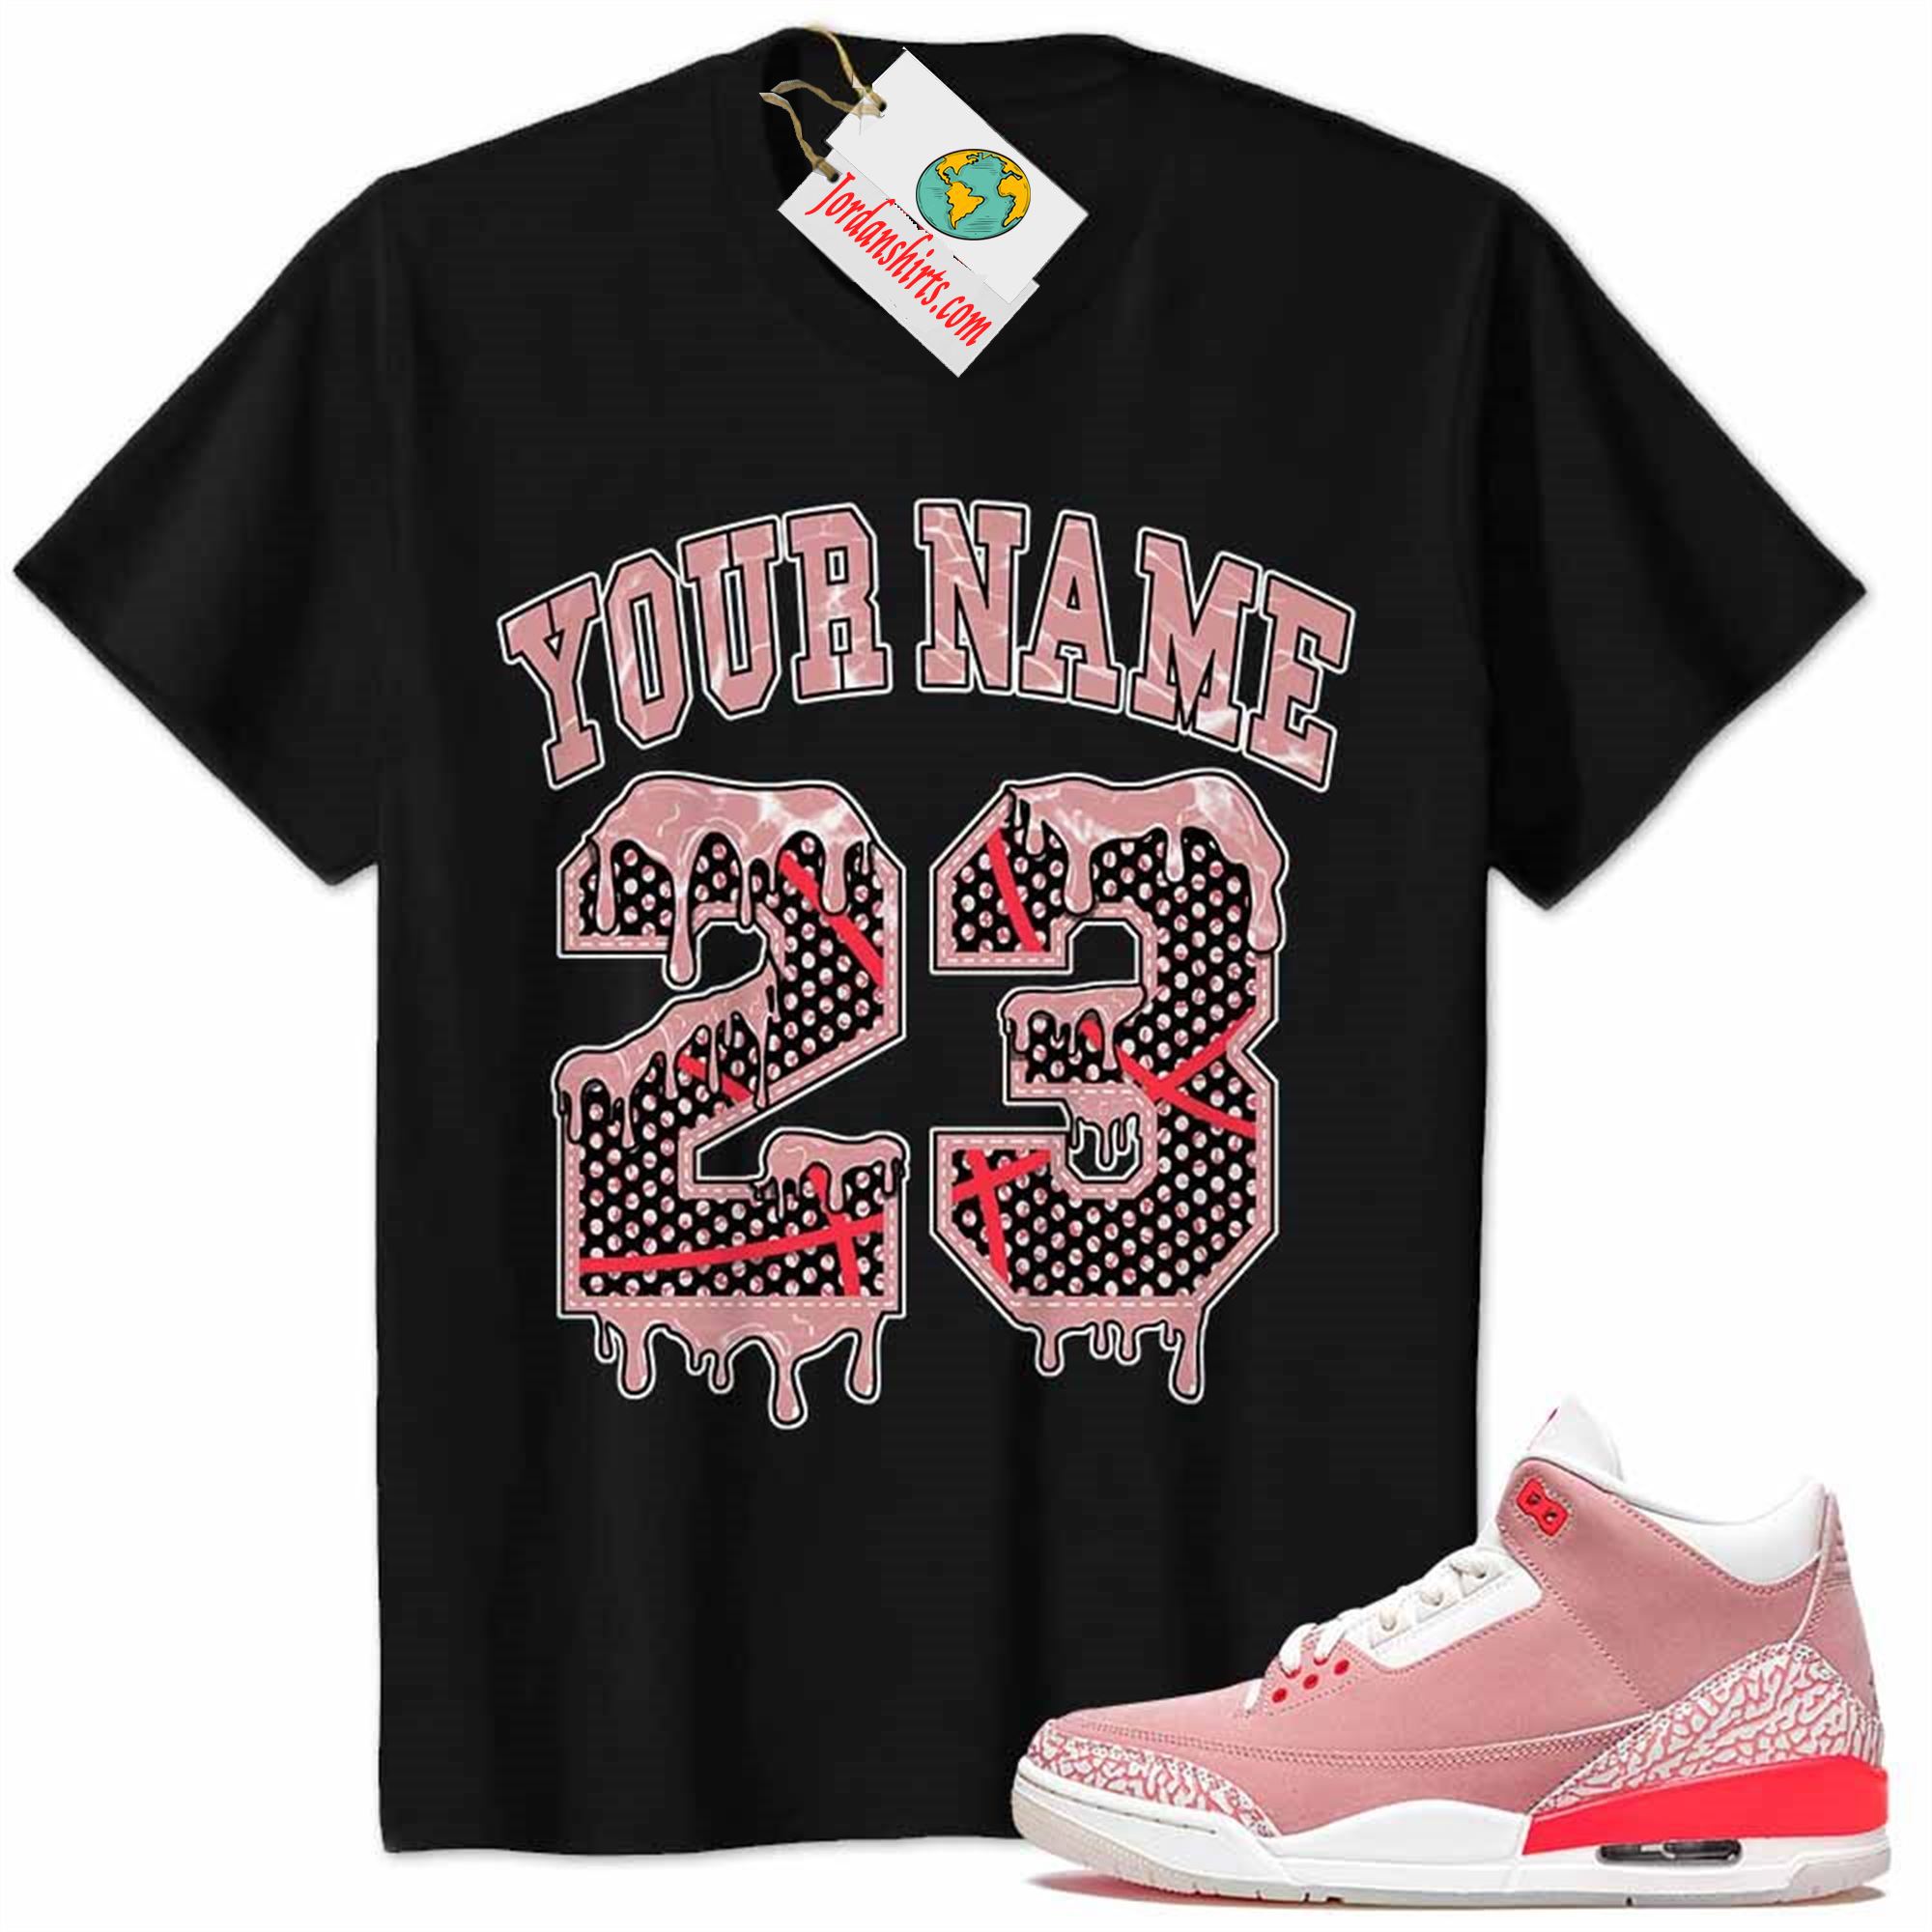 Jordan 3 Shirt, Jordan 3 Rust Pink Shirt Personalized No23 Drippin Black Full Size Up To 5xl